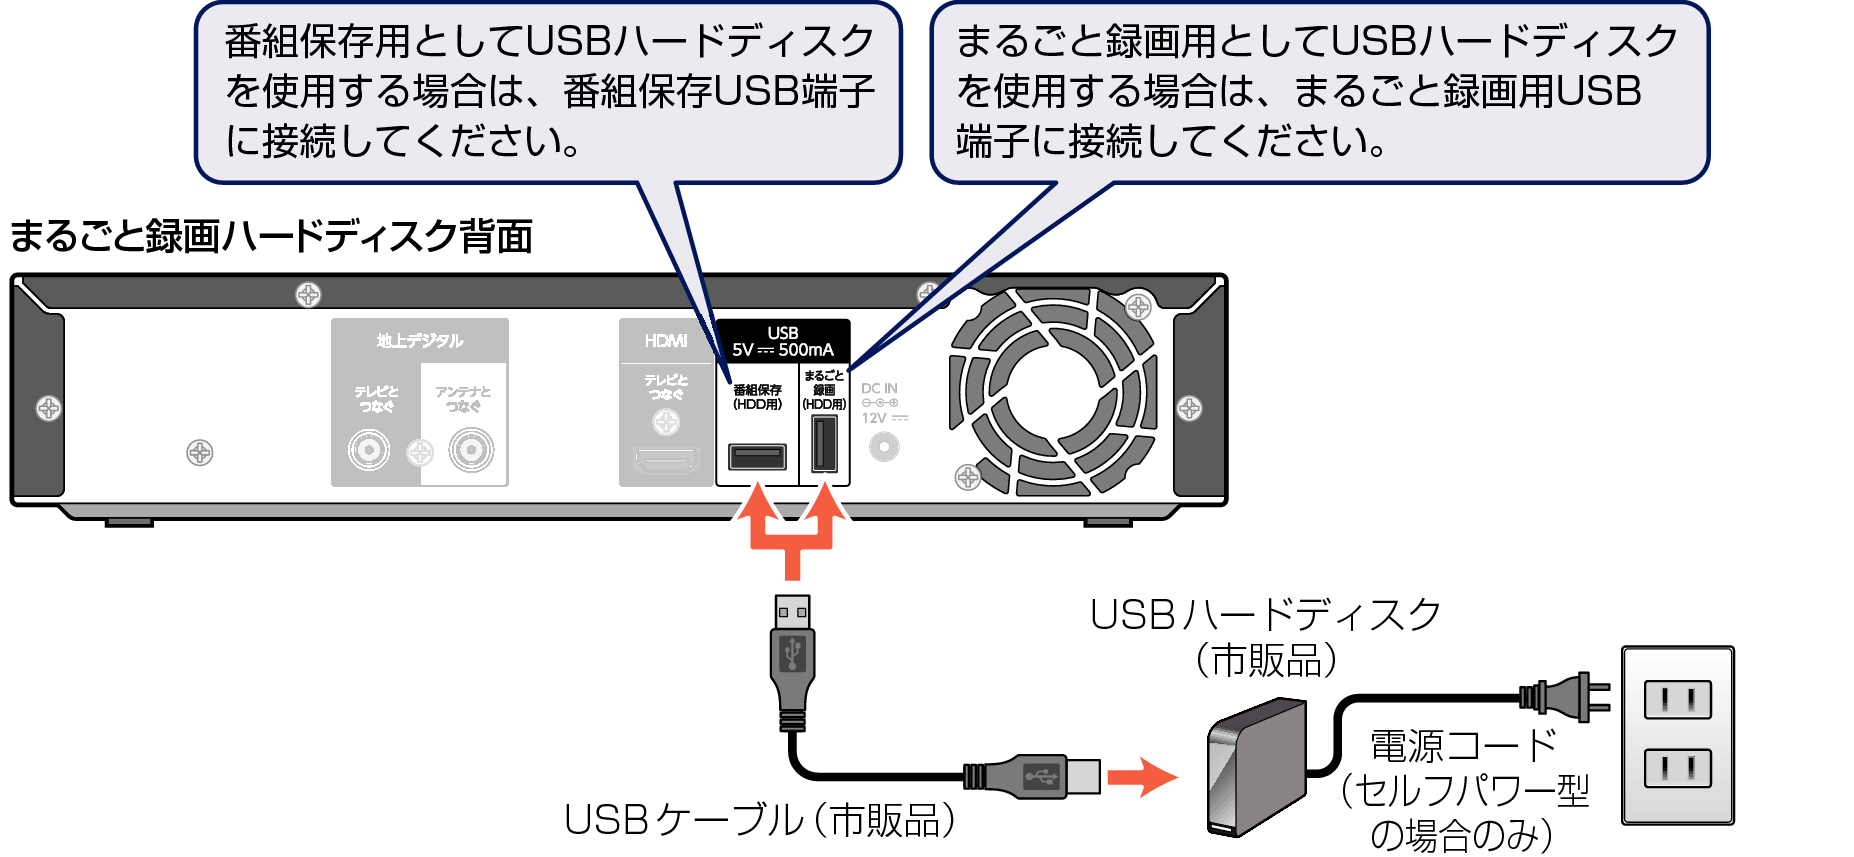 Connect_USBHDD_HDD2040